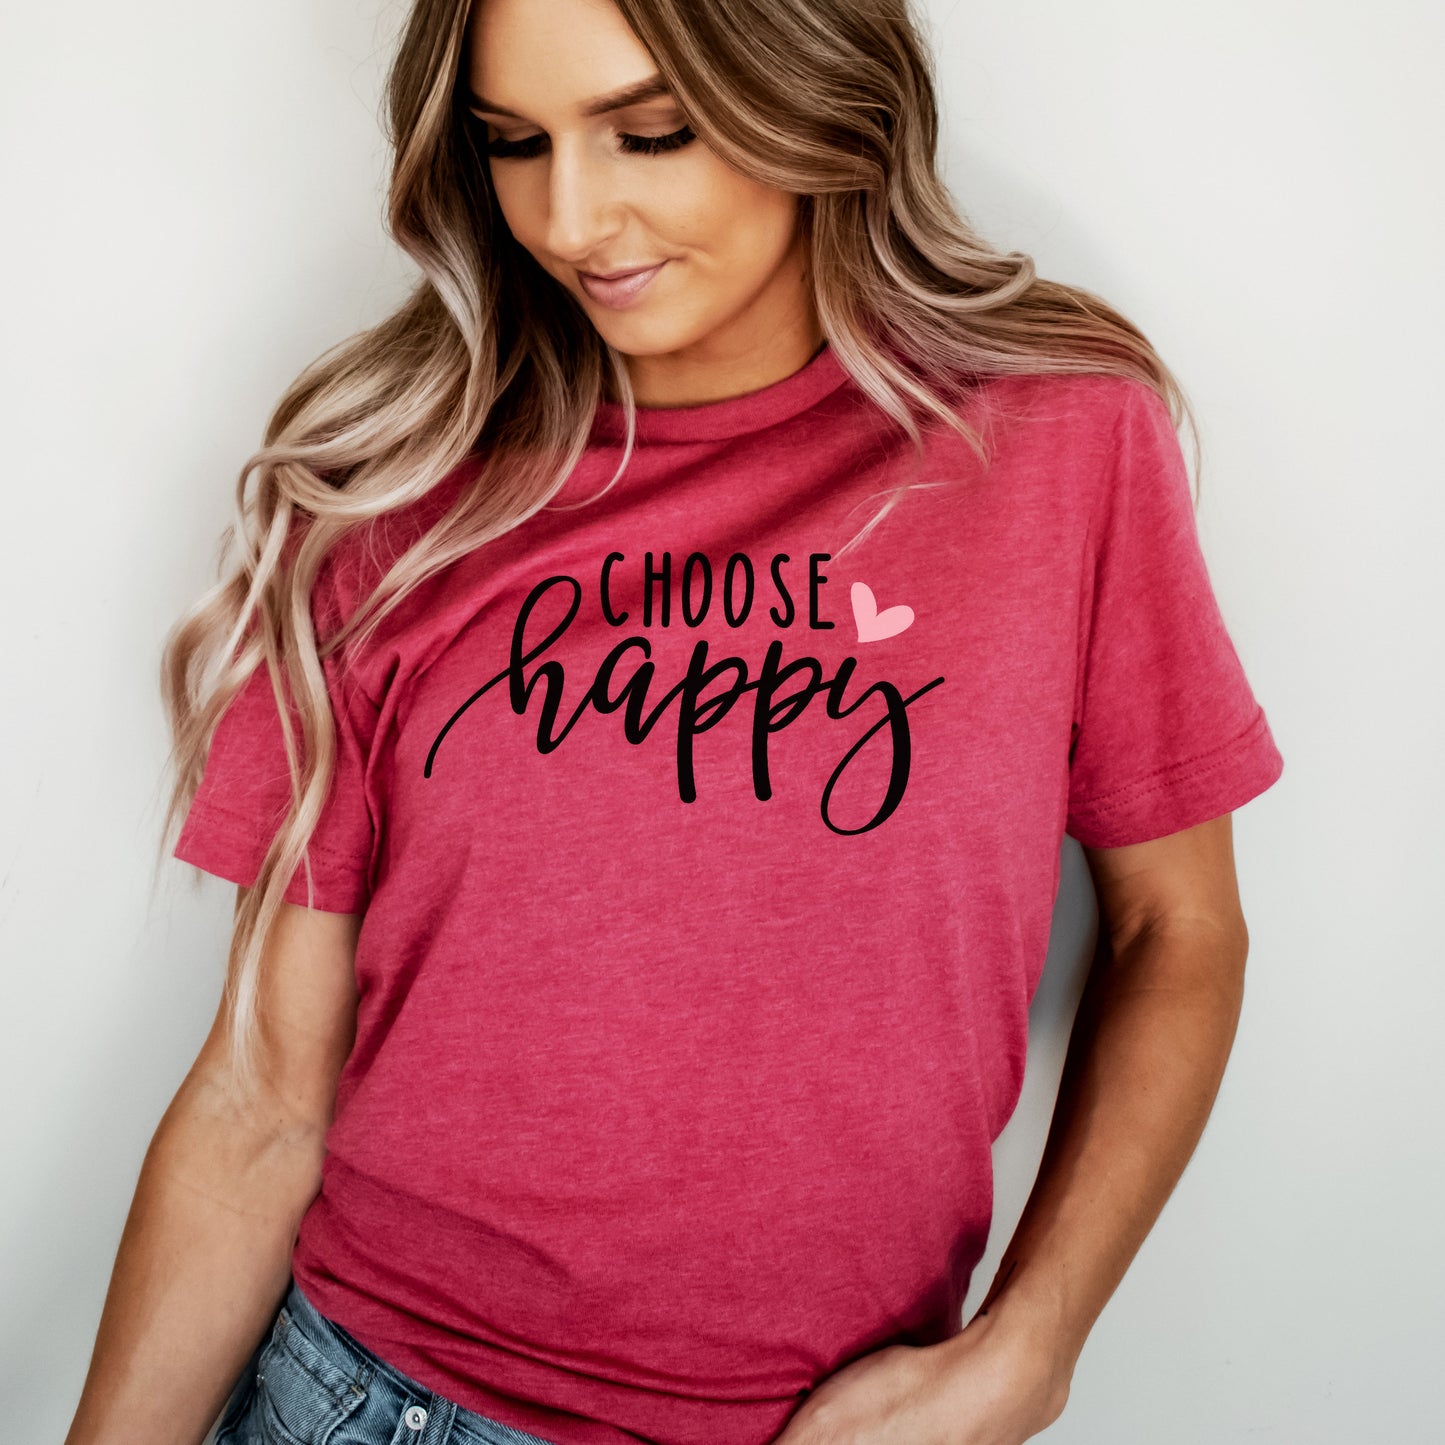 Choose Happy Heart Love Kindness Soft graphic T-shirt - Unisex Women's Cozy Tee